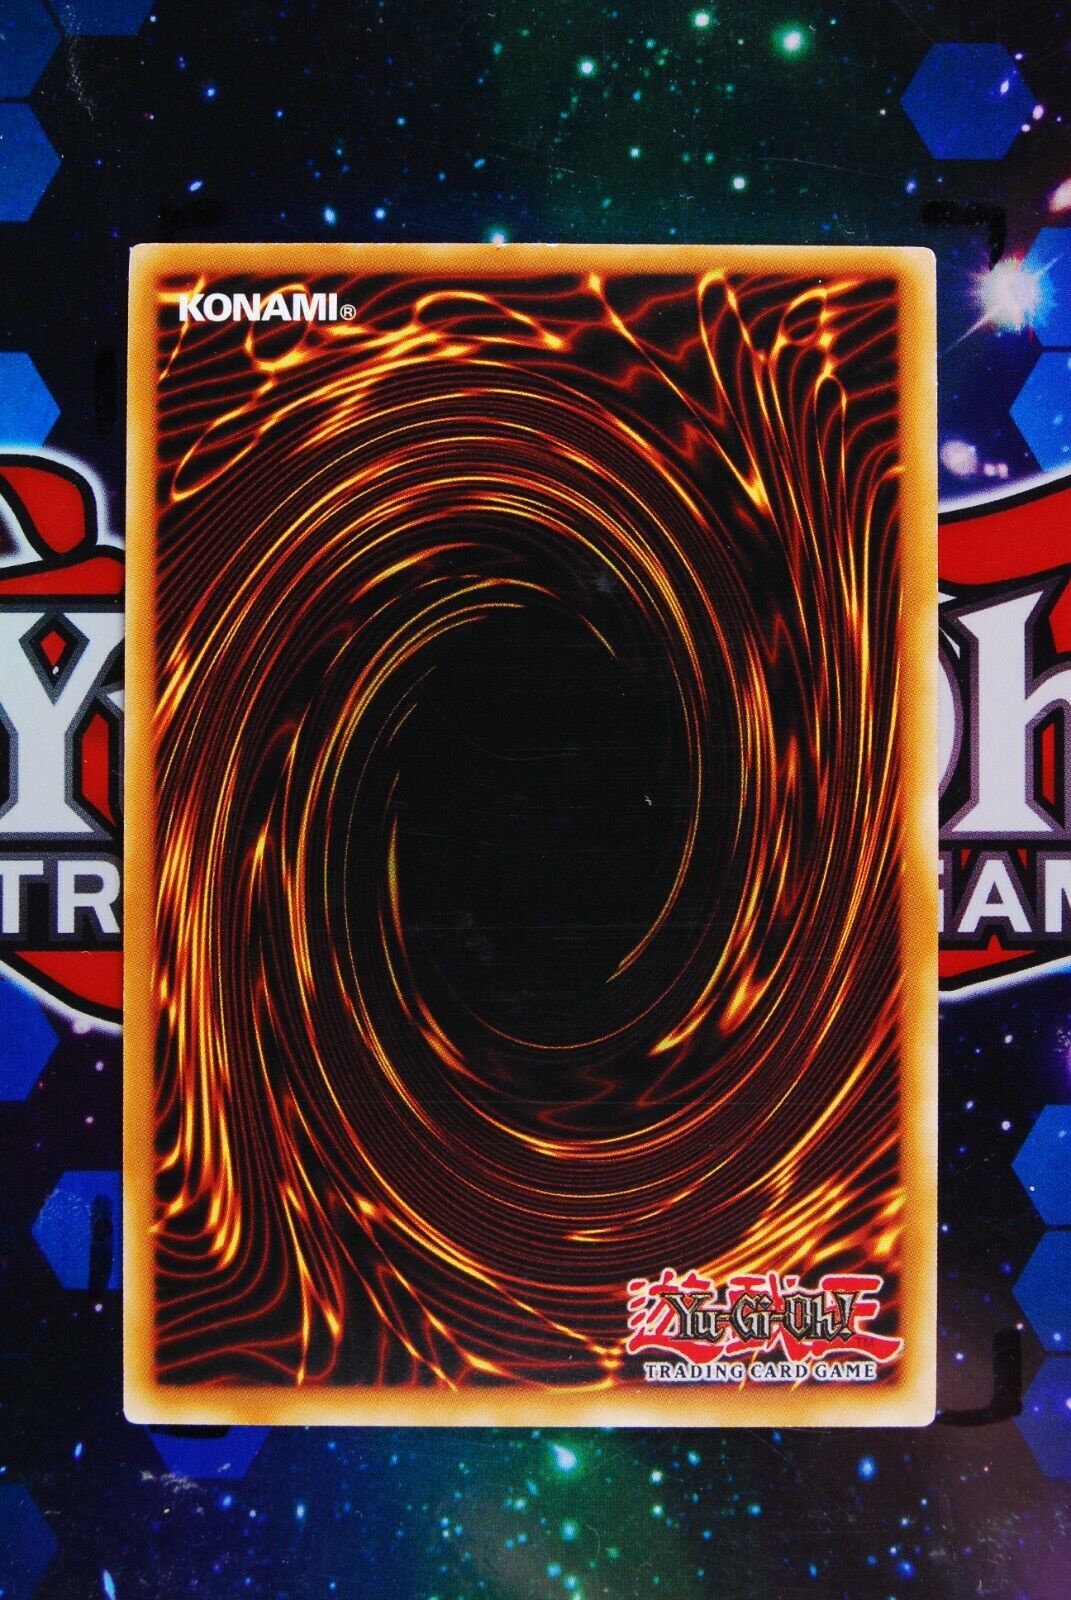 Creeping Darkness ORCS-EN059 Super Rare Yugioh Card